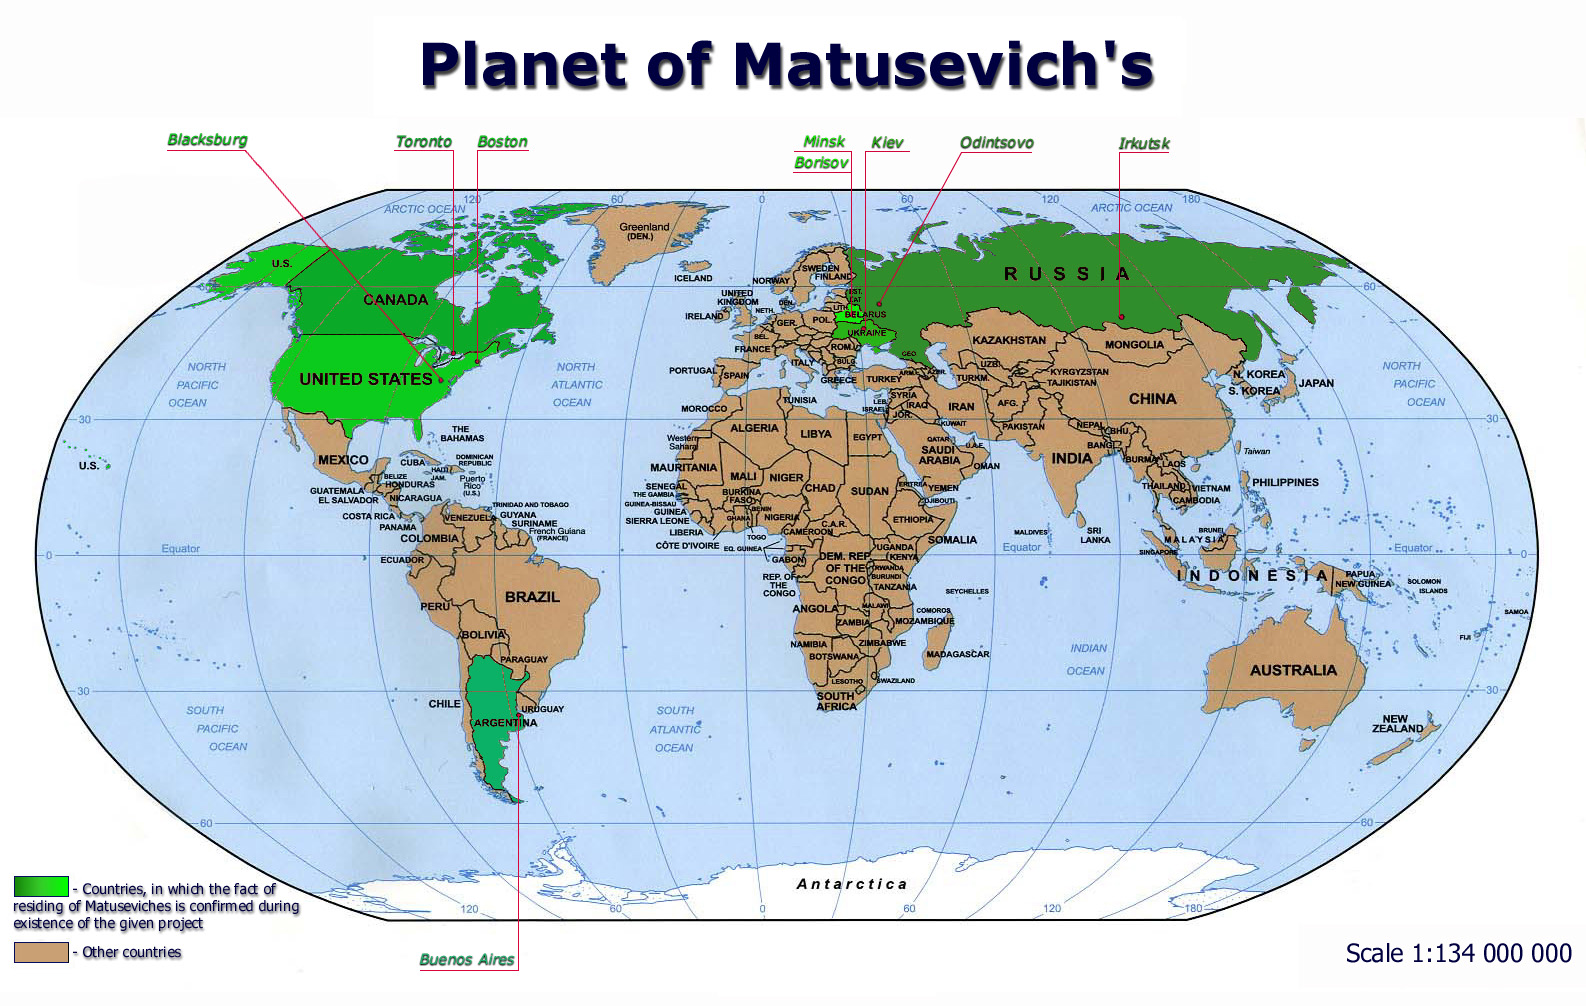 Matusevich's Planet